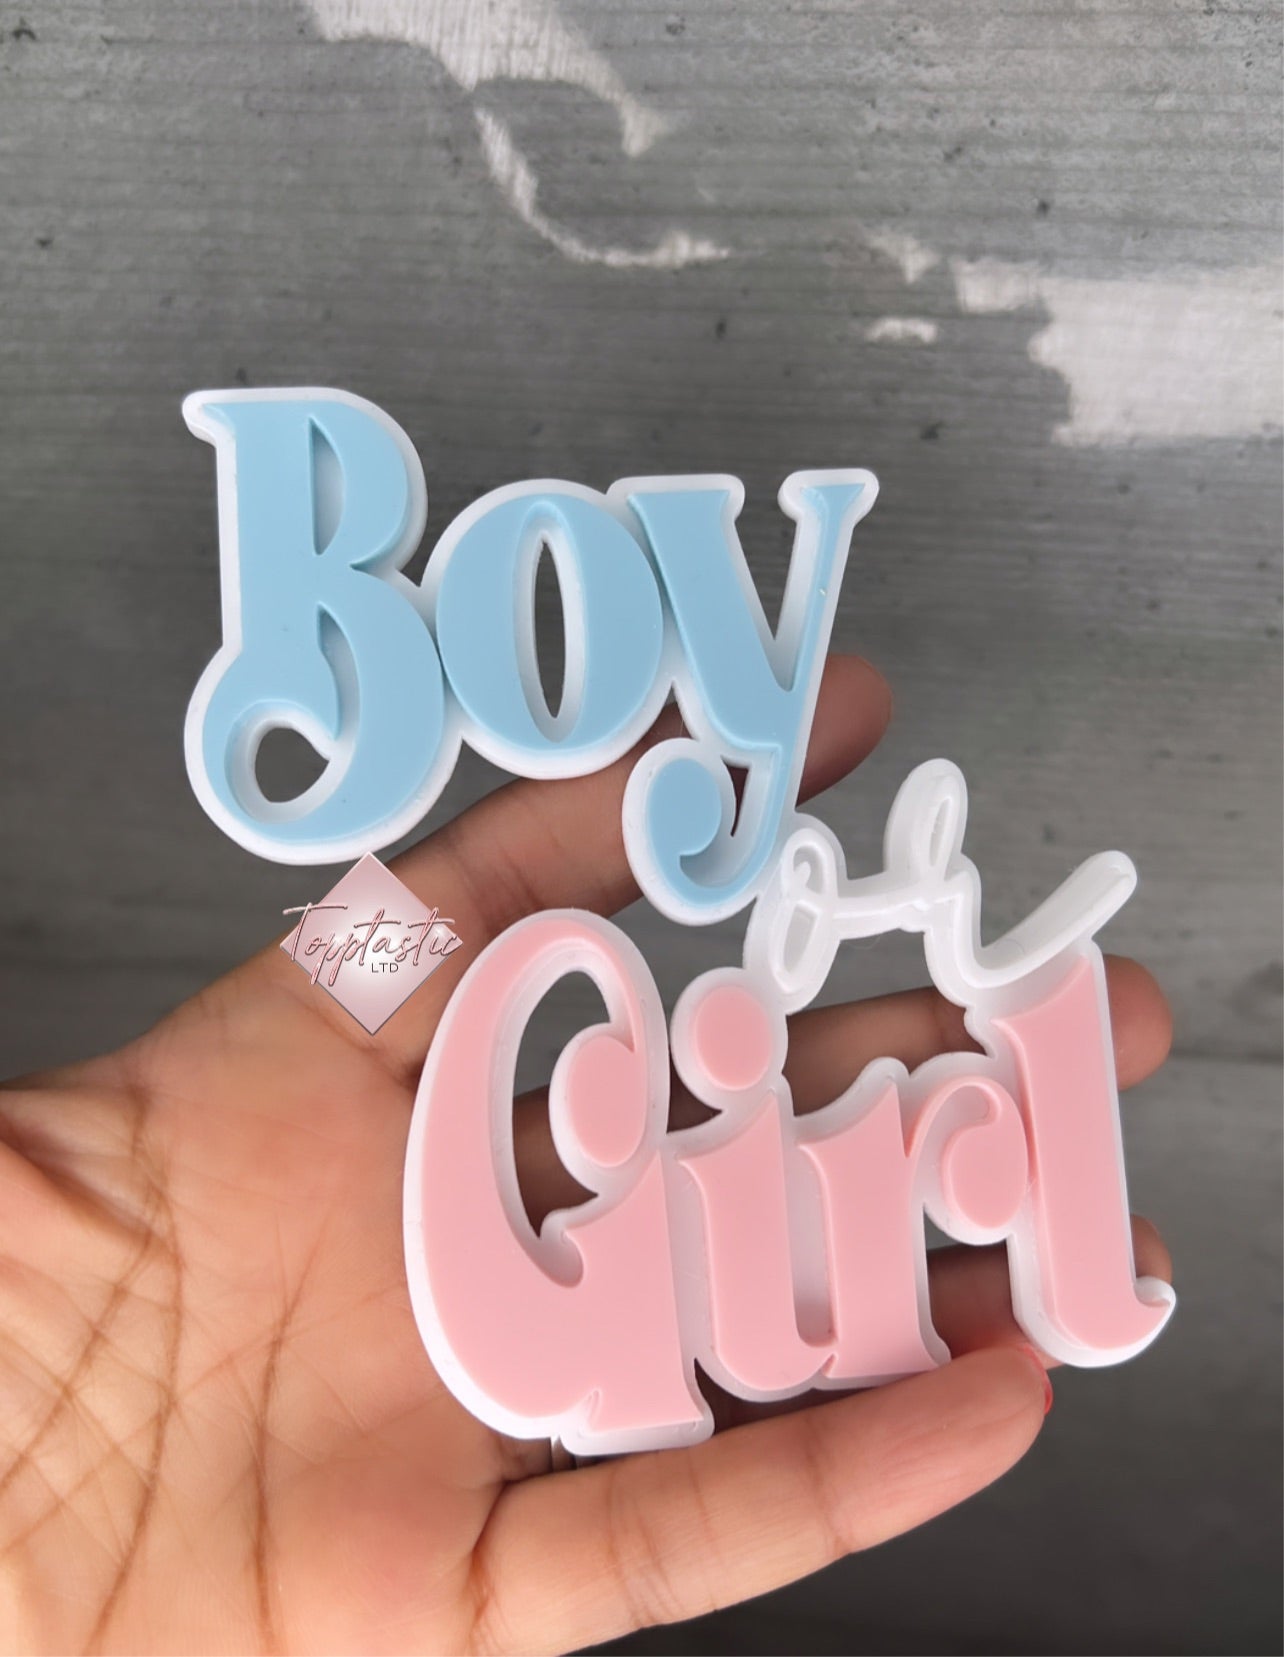 Boy or Girl charm/ topper